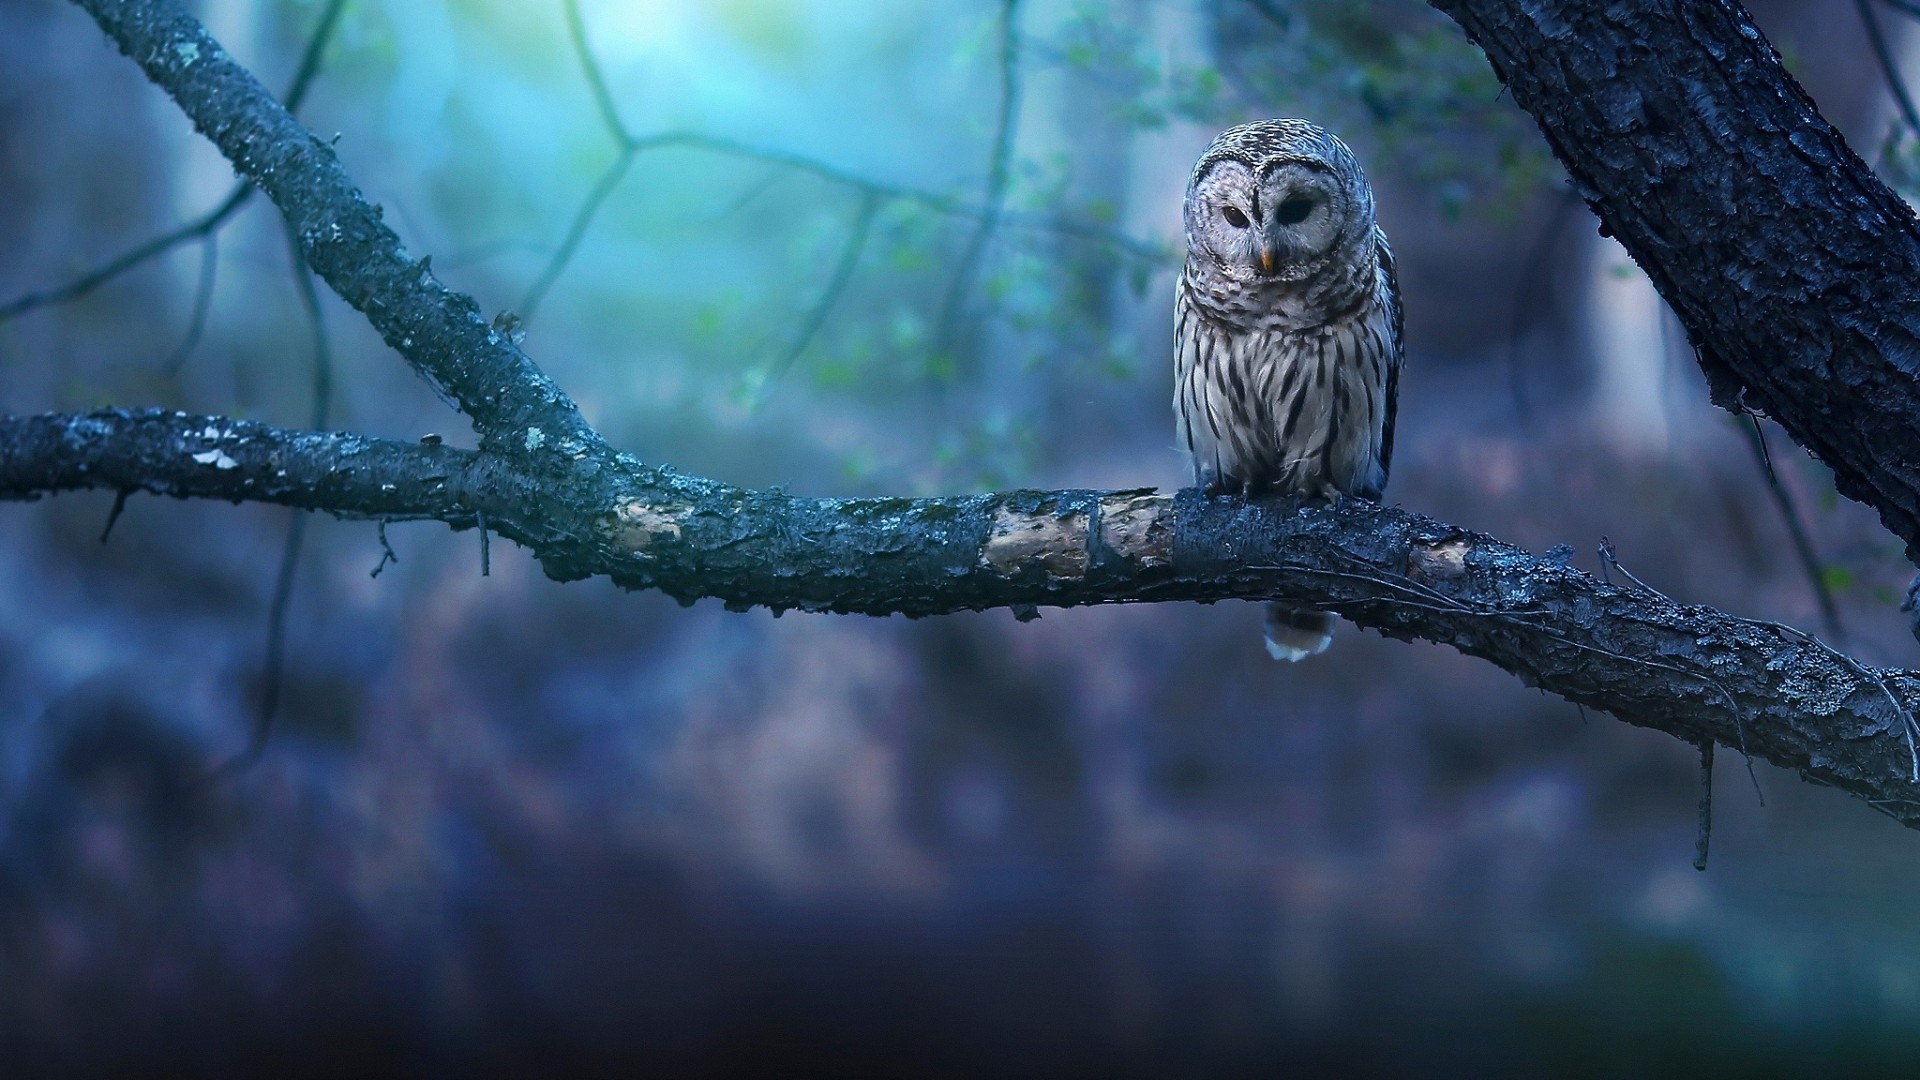 Wallpaper Of Bird, Owl, Tree Background & Hd Image - Owl Wallpaper For Pc - HD Wallpaper 